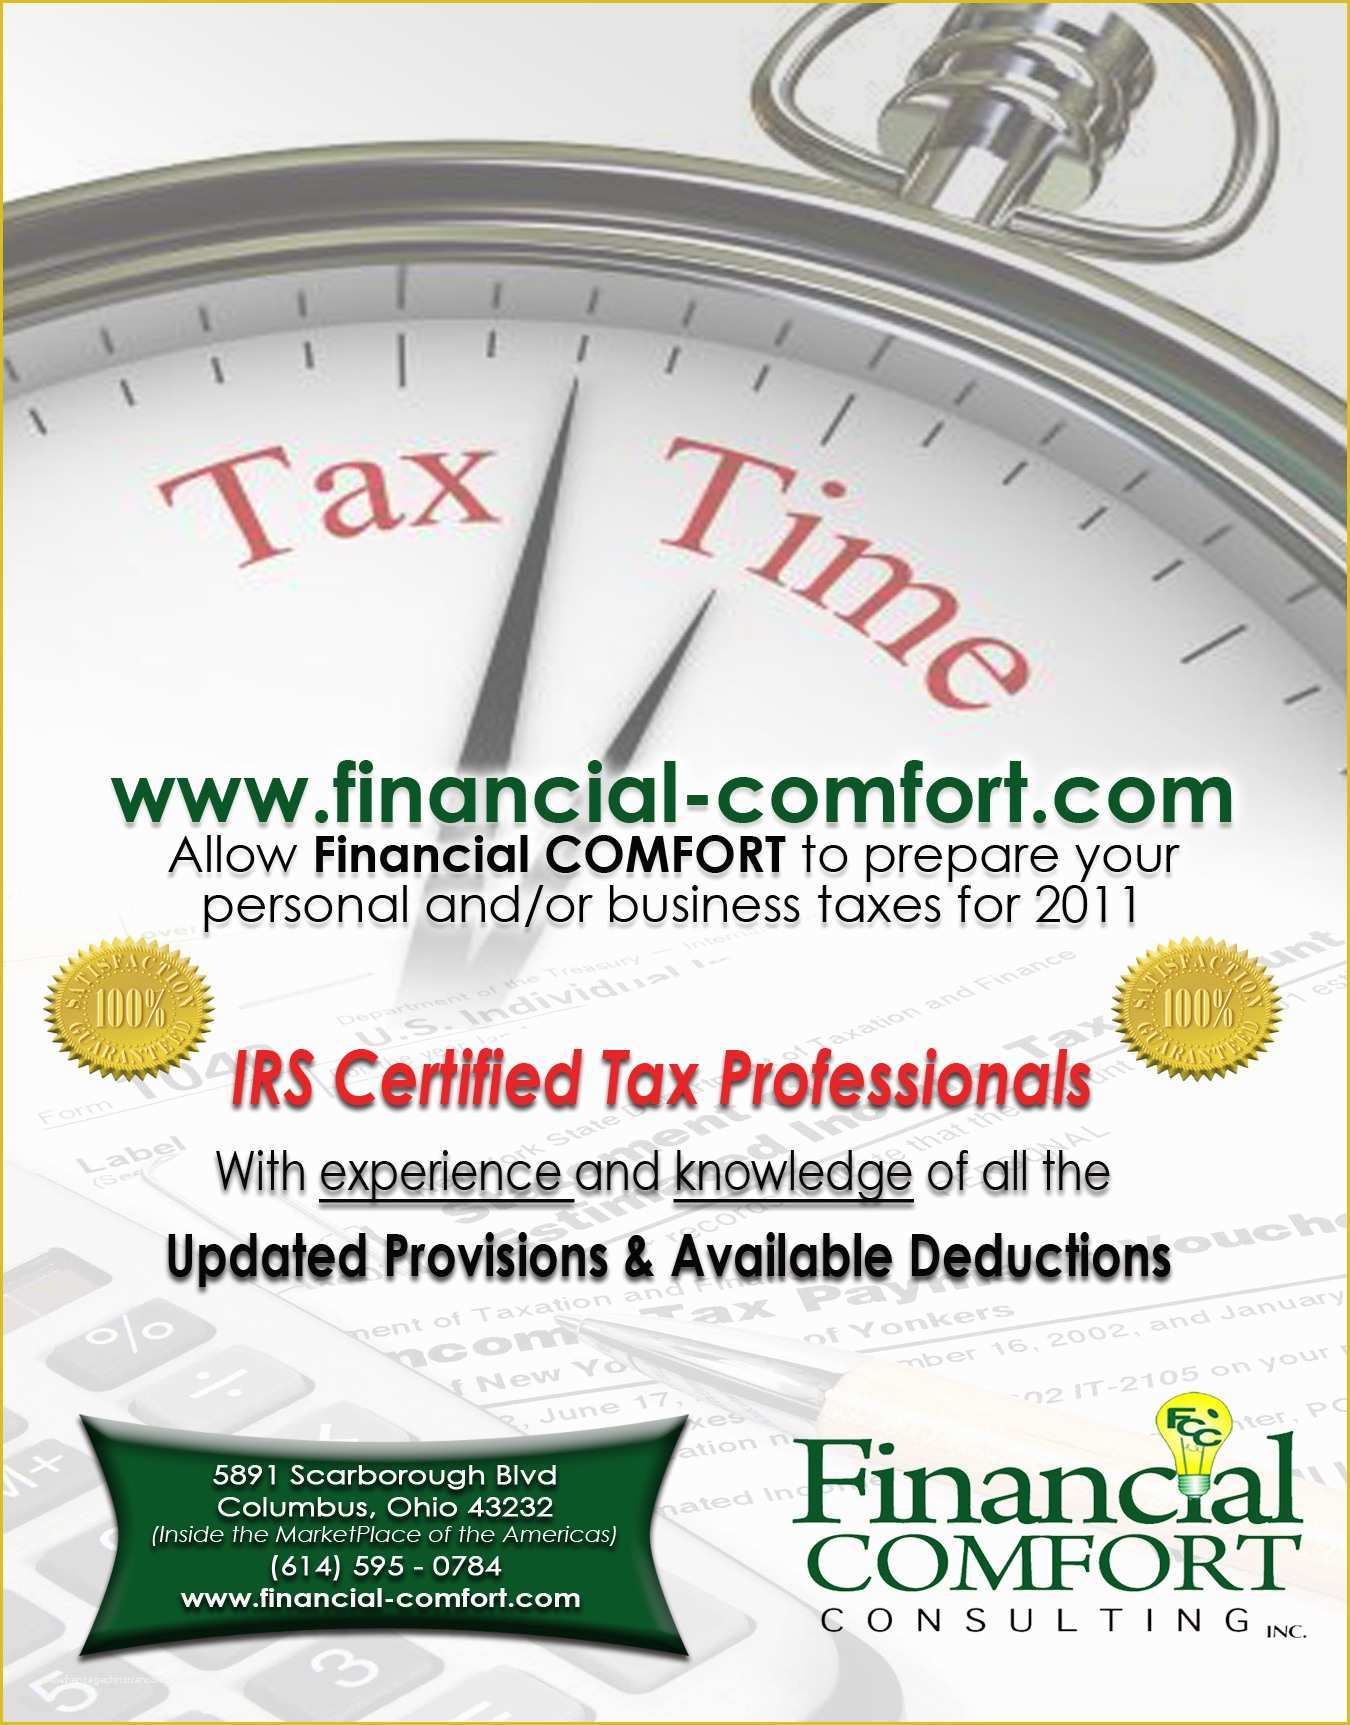 Free Tax Preparation Flyers Templates Of Tax Preparation Flyers Templates Yourweek 29de5deca25e